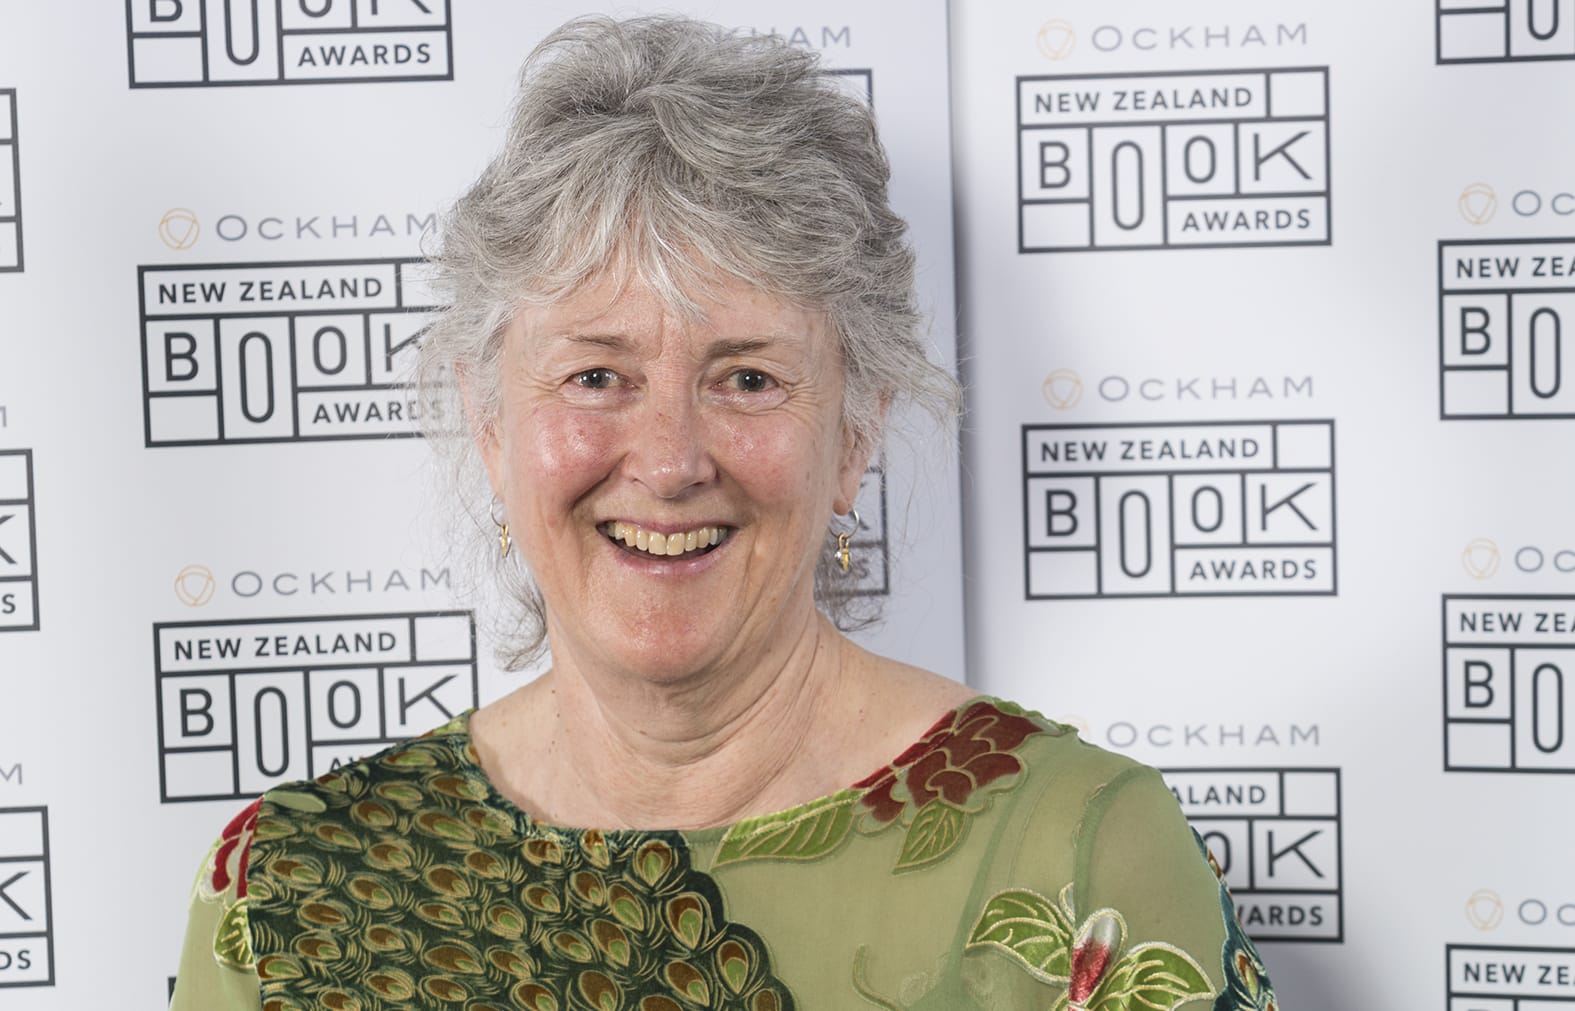 Professor Barbara Brookes